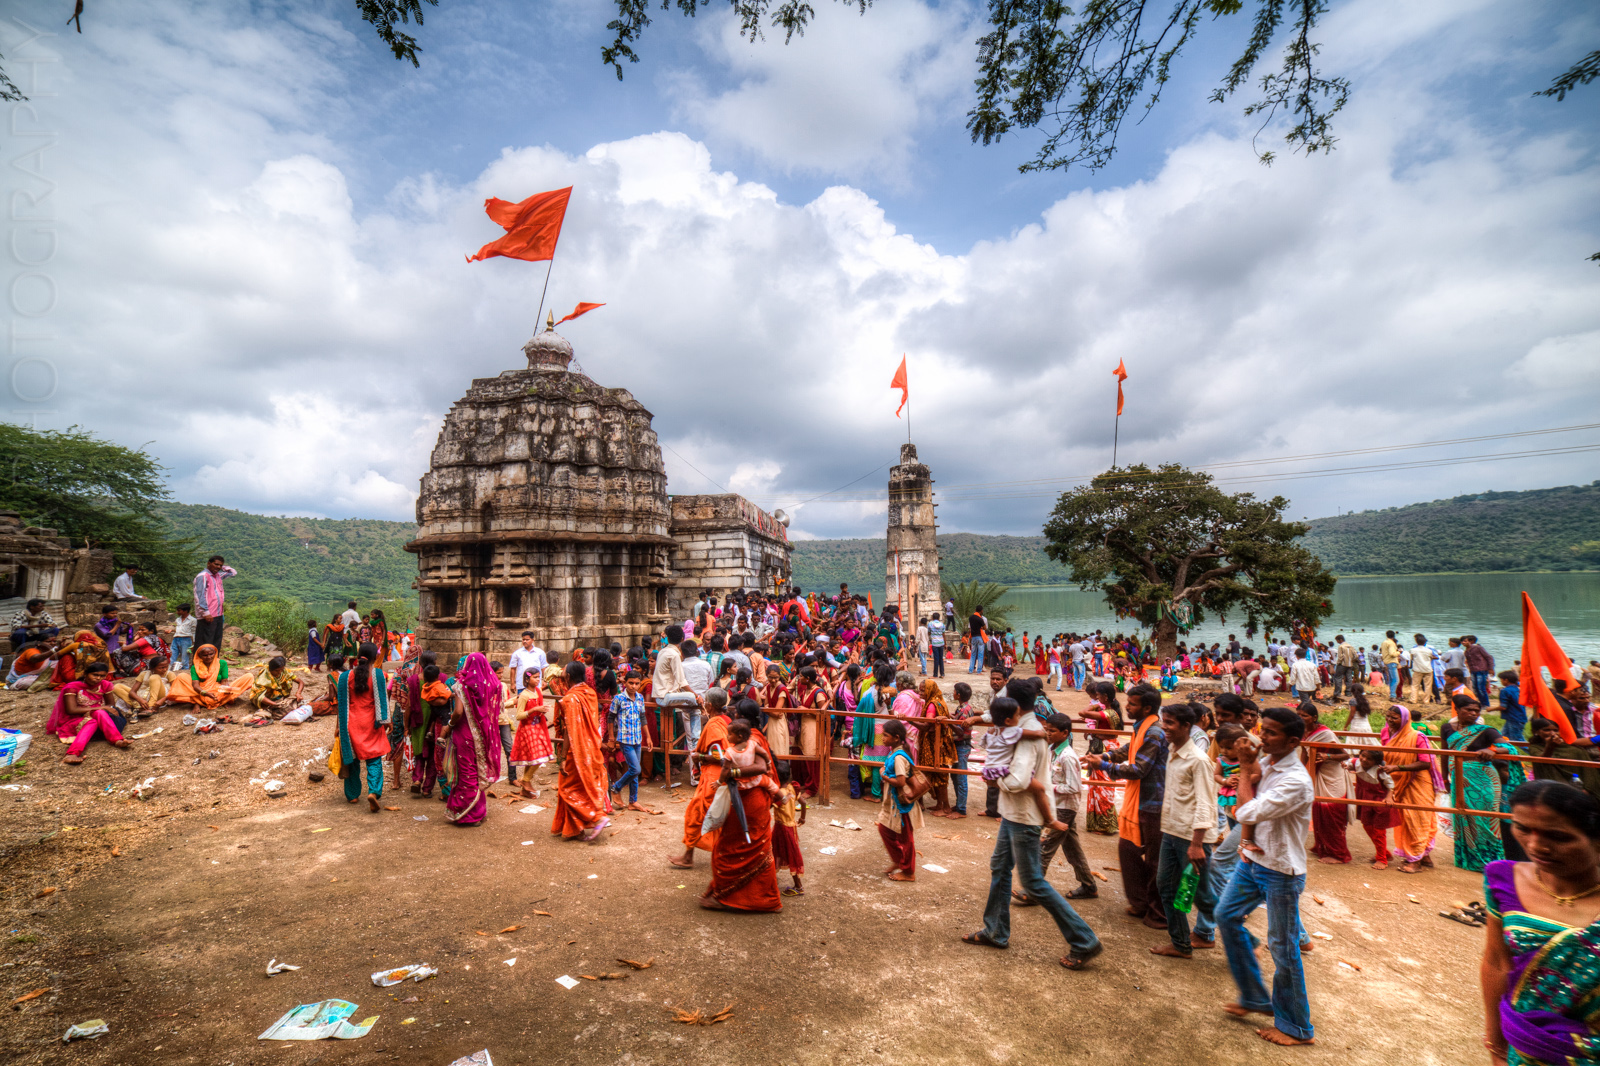 Devotees flock the Kamalja Devi Temple, at the Lonar lake